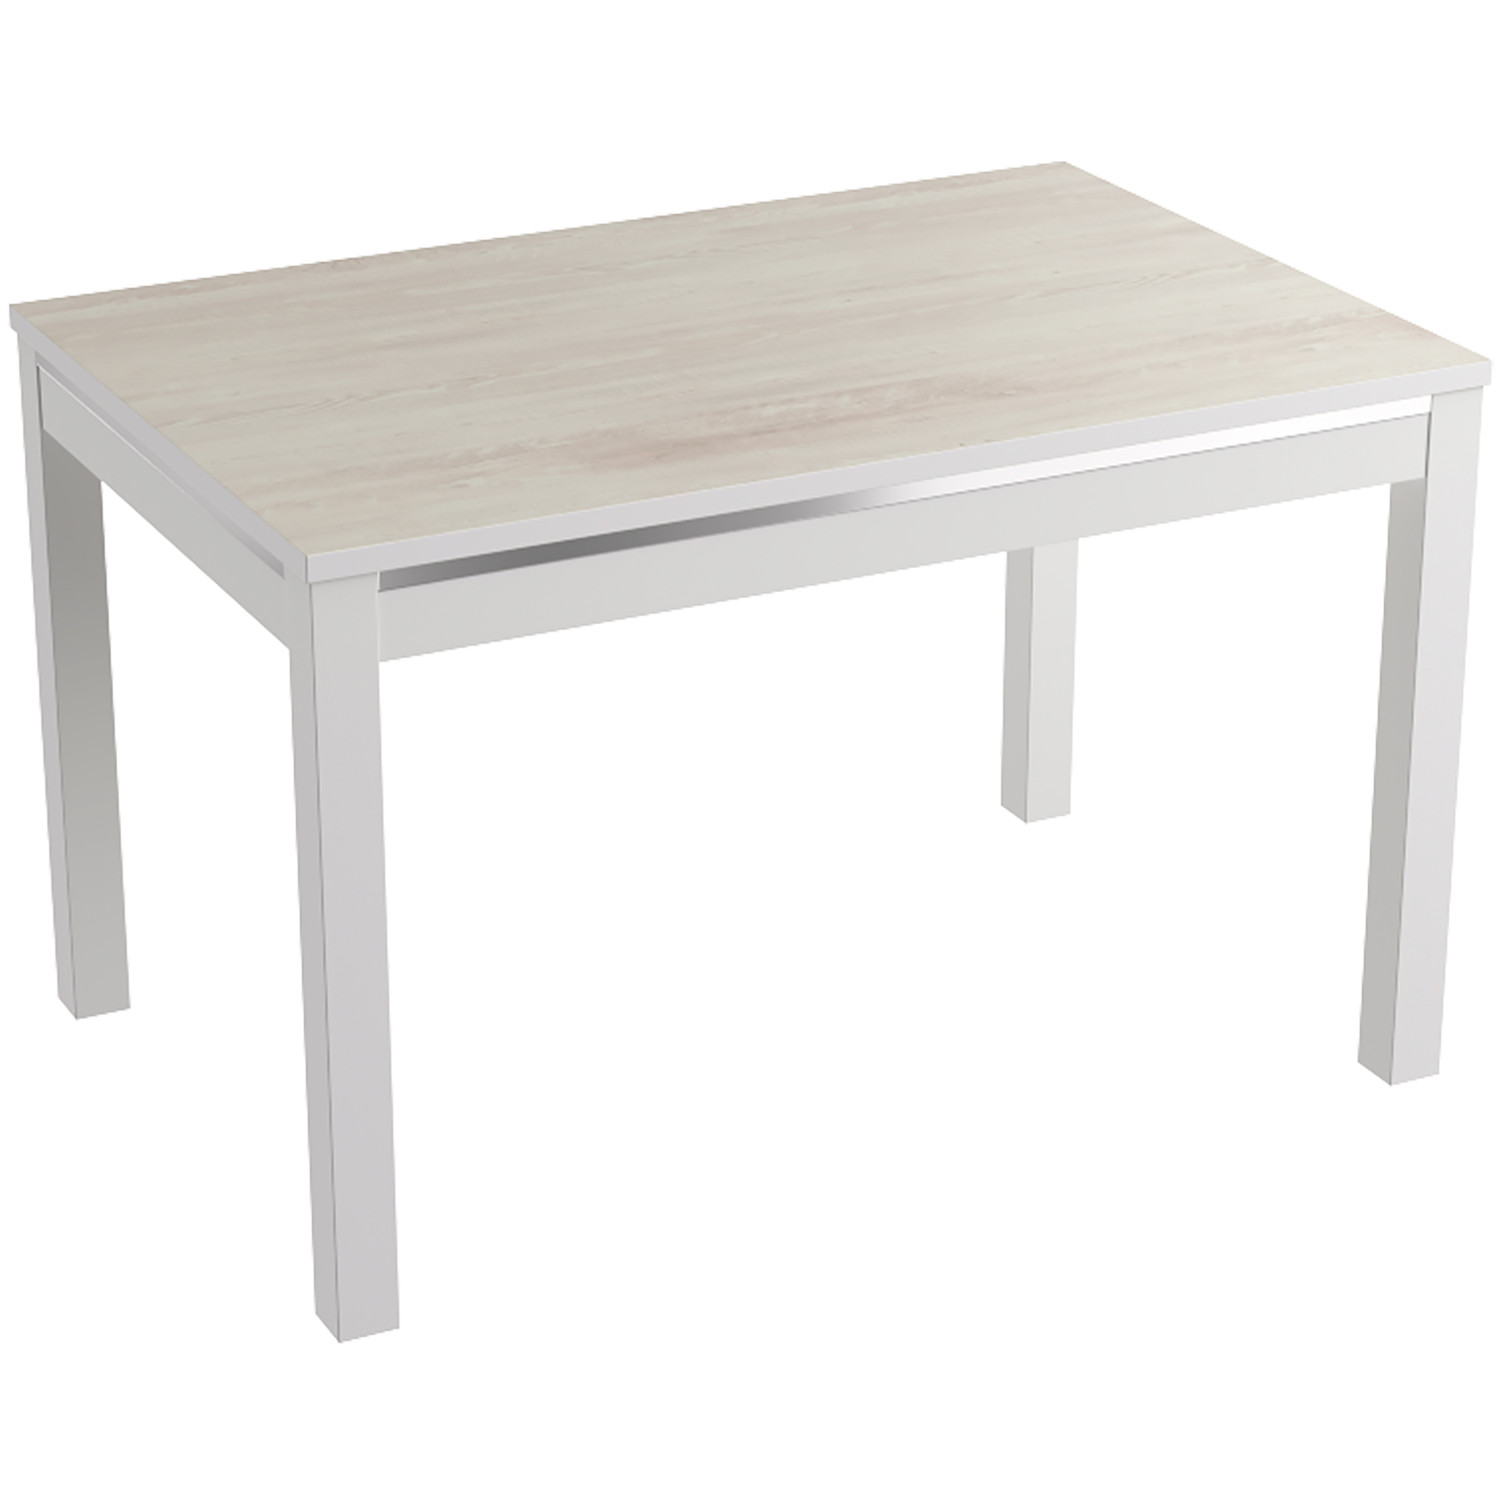 Обеденные столы Барон 3 сосна белая фото 1 — New Style of Furniture